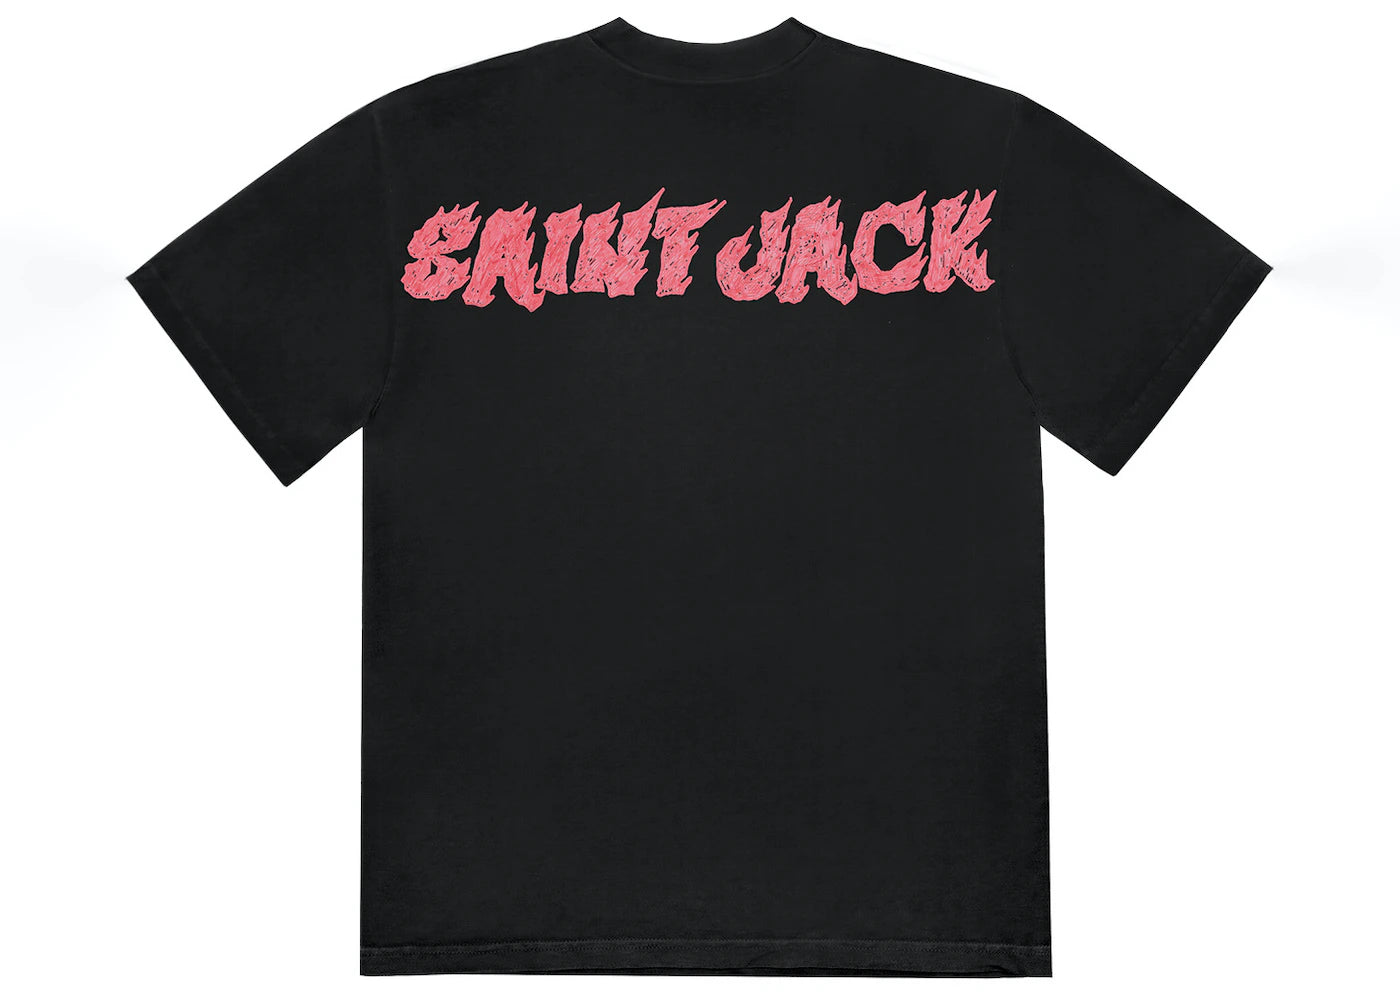 Travis Scott Cactus Jack Utopia St. Michael 2B T-Shirt Black